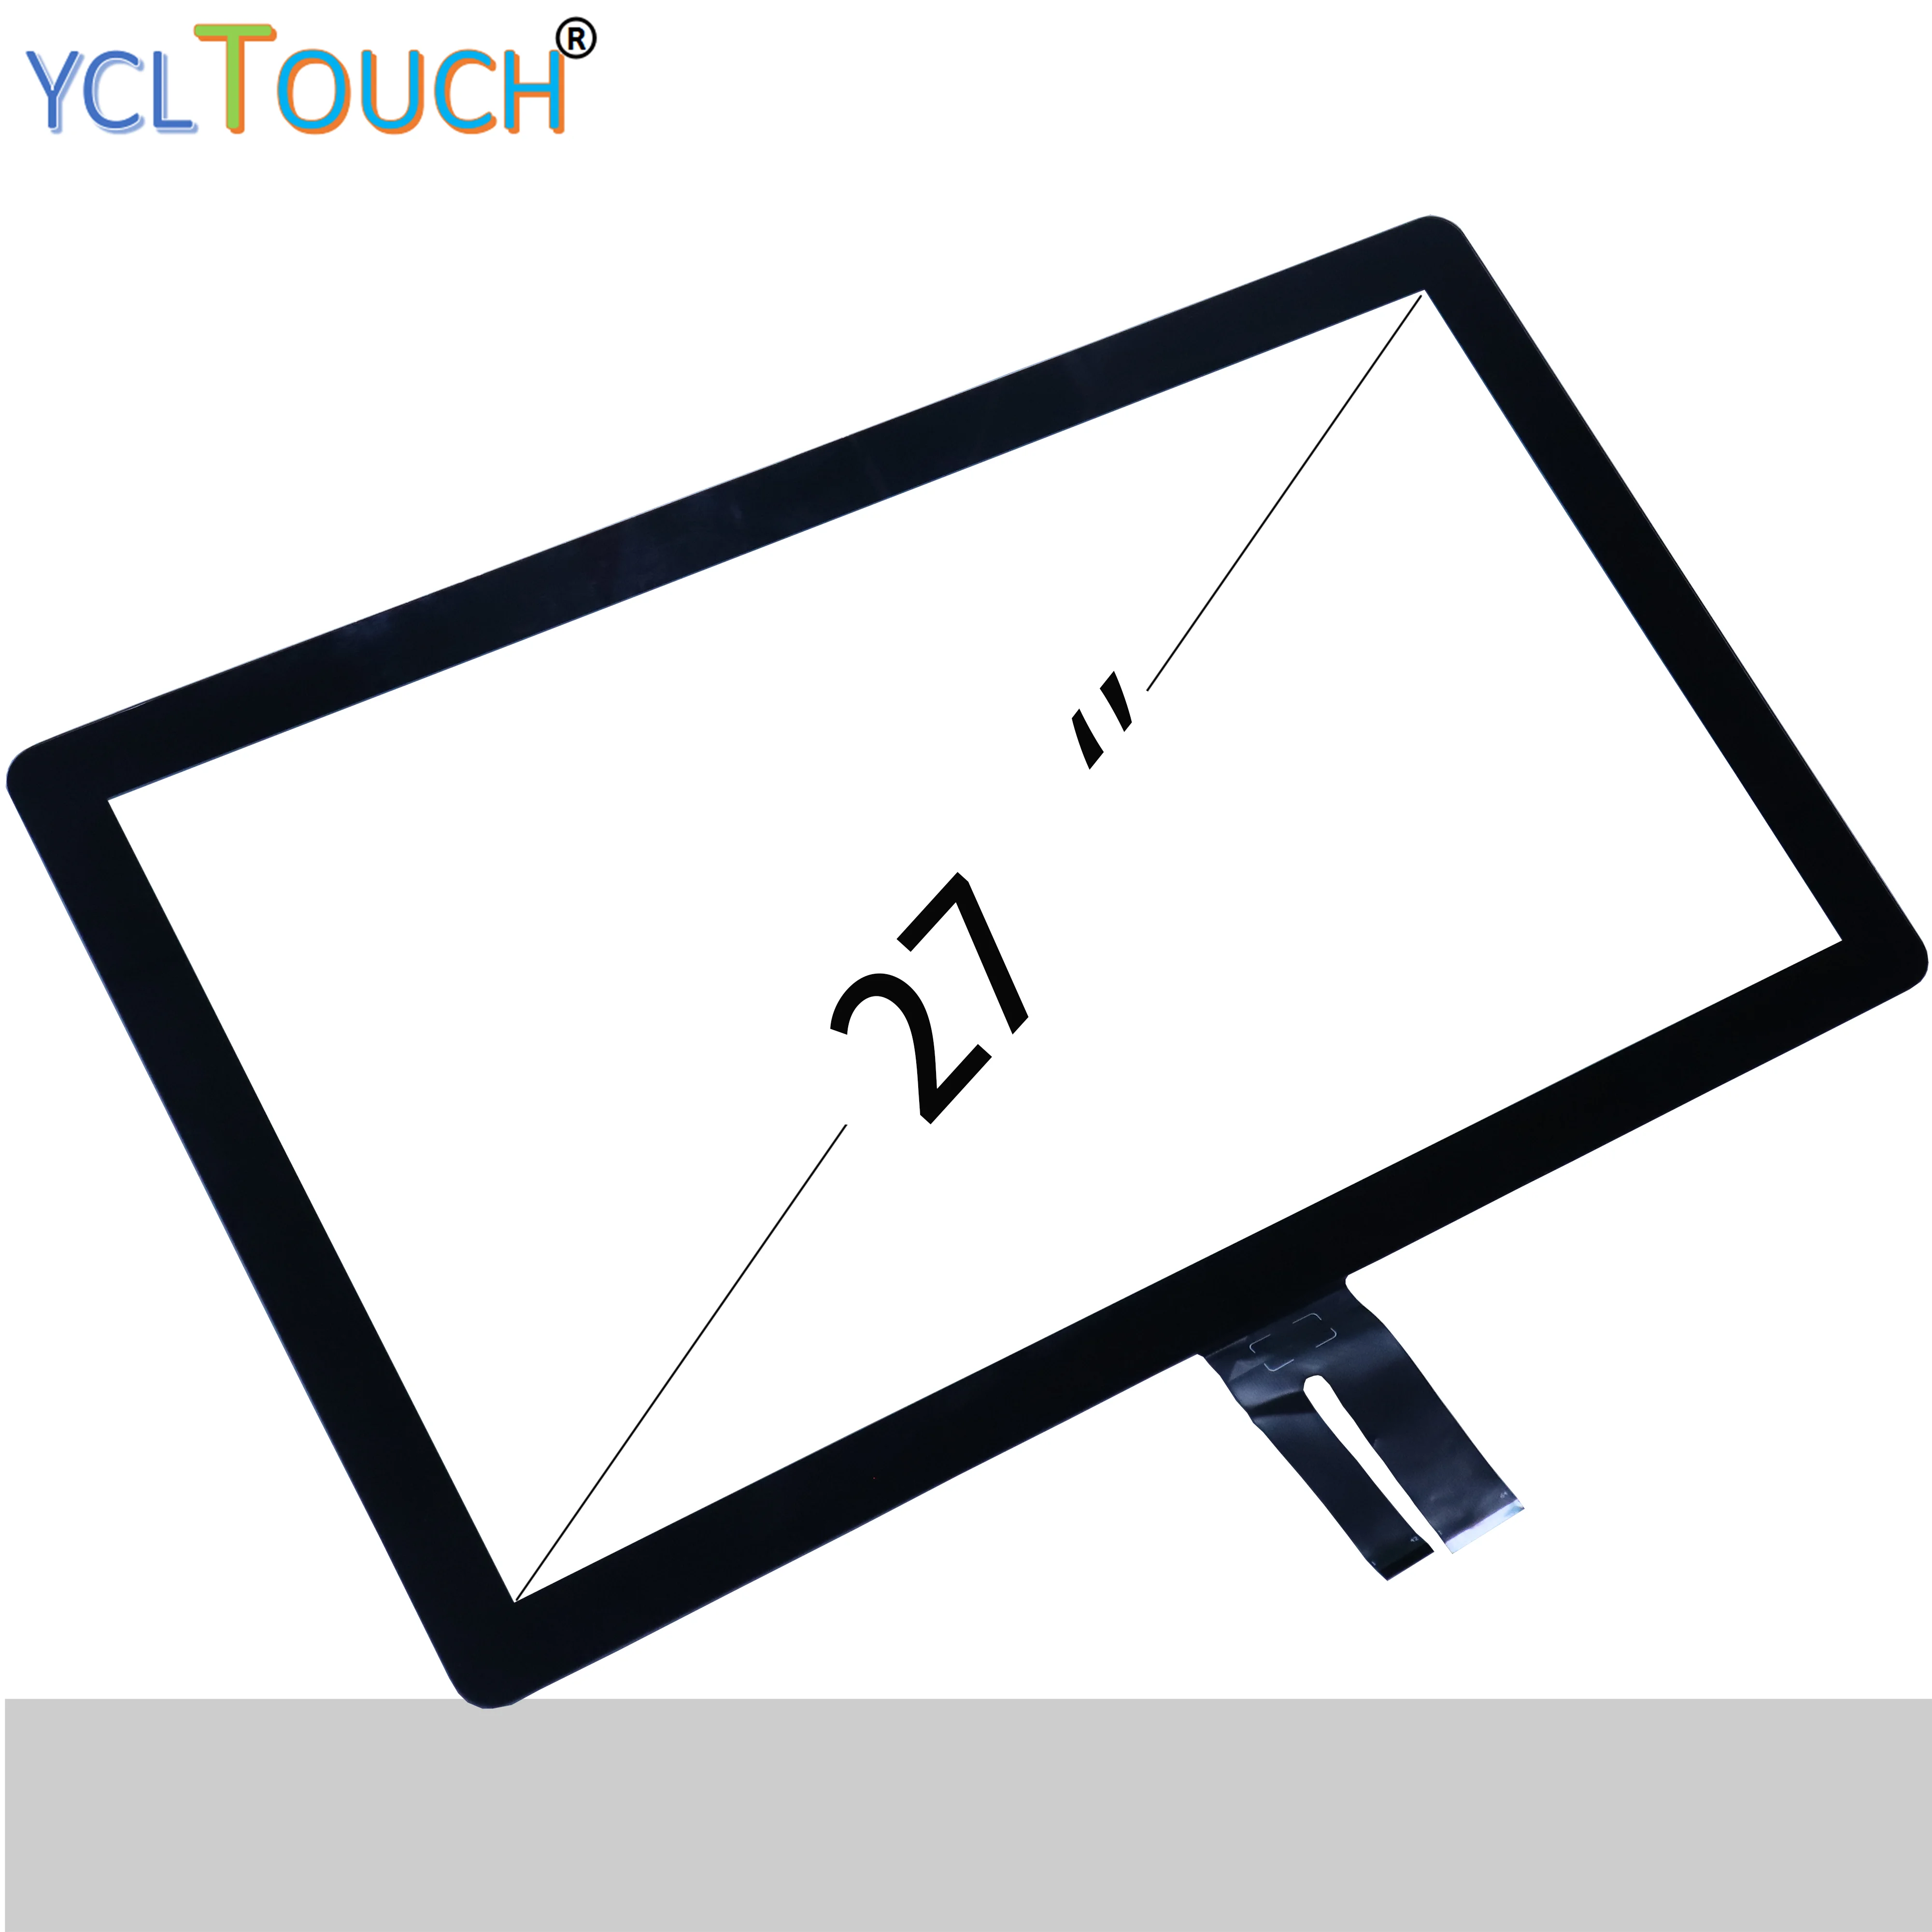 

27" inch custom multi touch EETI ILITEK USB Pcap ctp capacitive touch screen panel kit